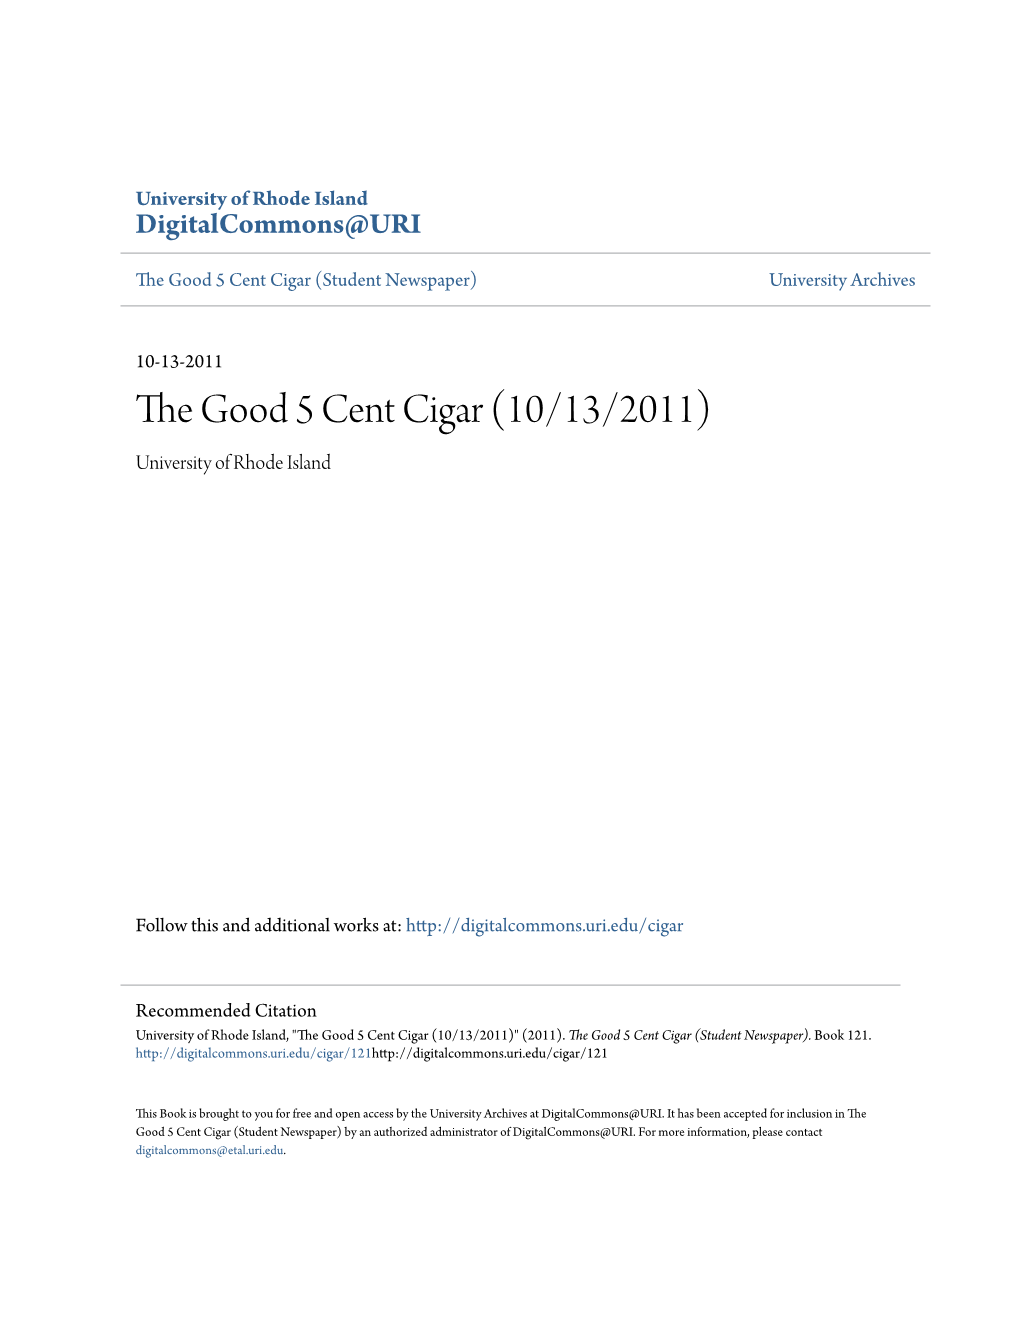 The Good 5 Cent Cigar (10/13/2011) University of Rhode Island